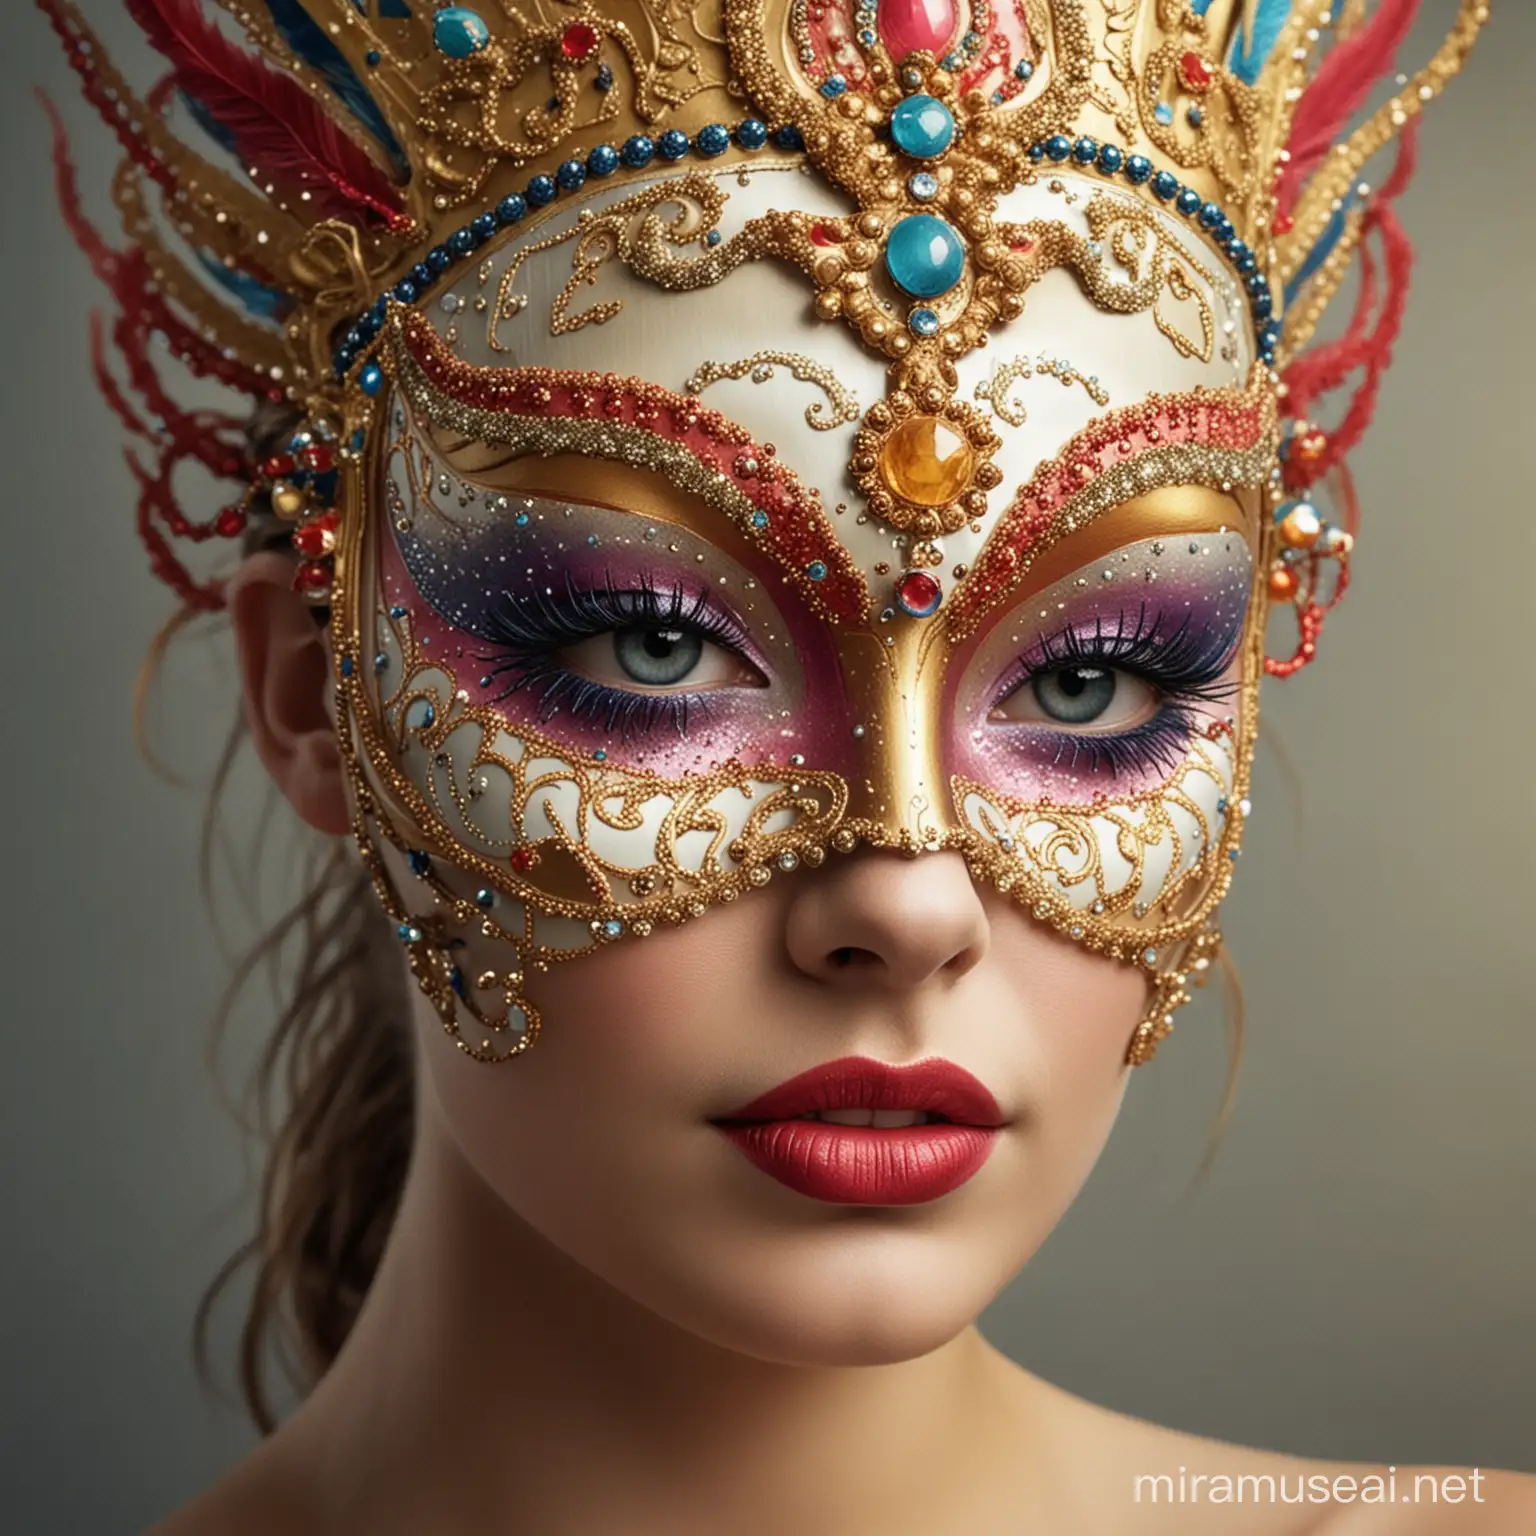 Colorful Carnival Mask Adorned Girls Face